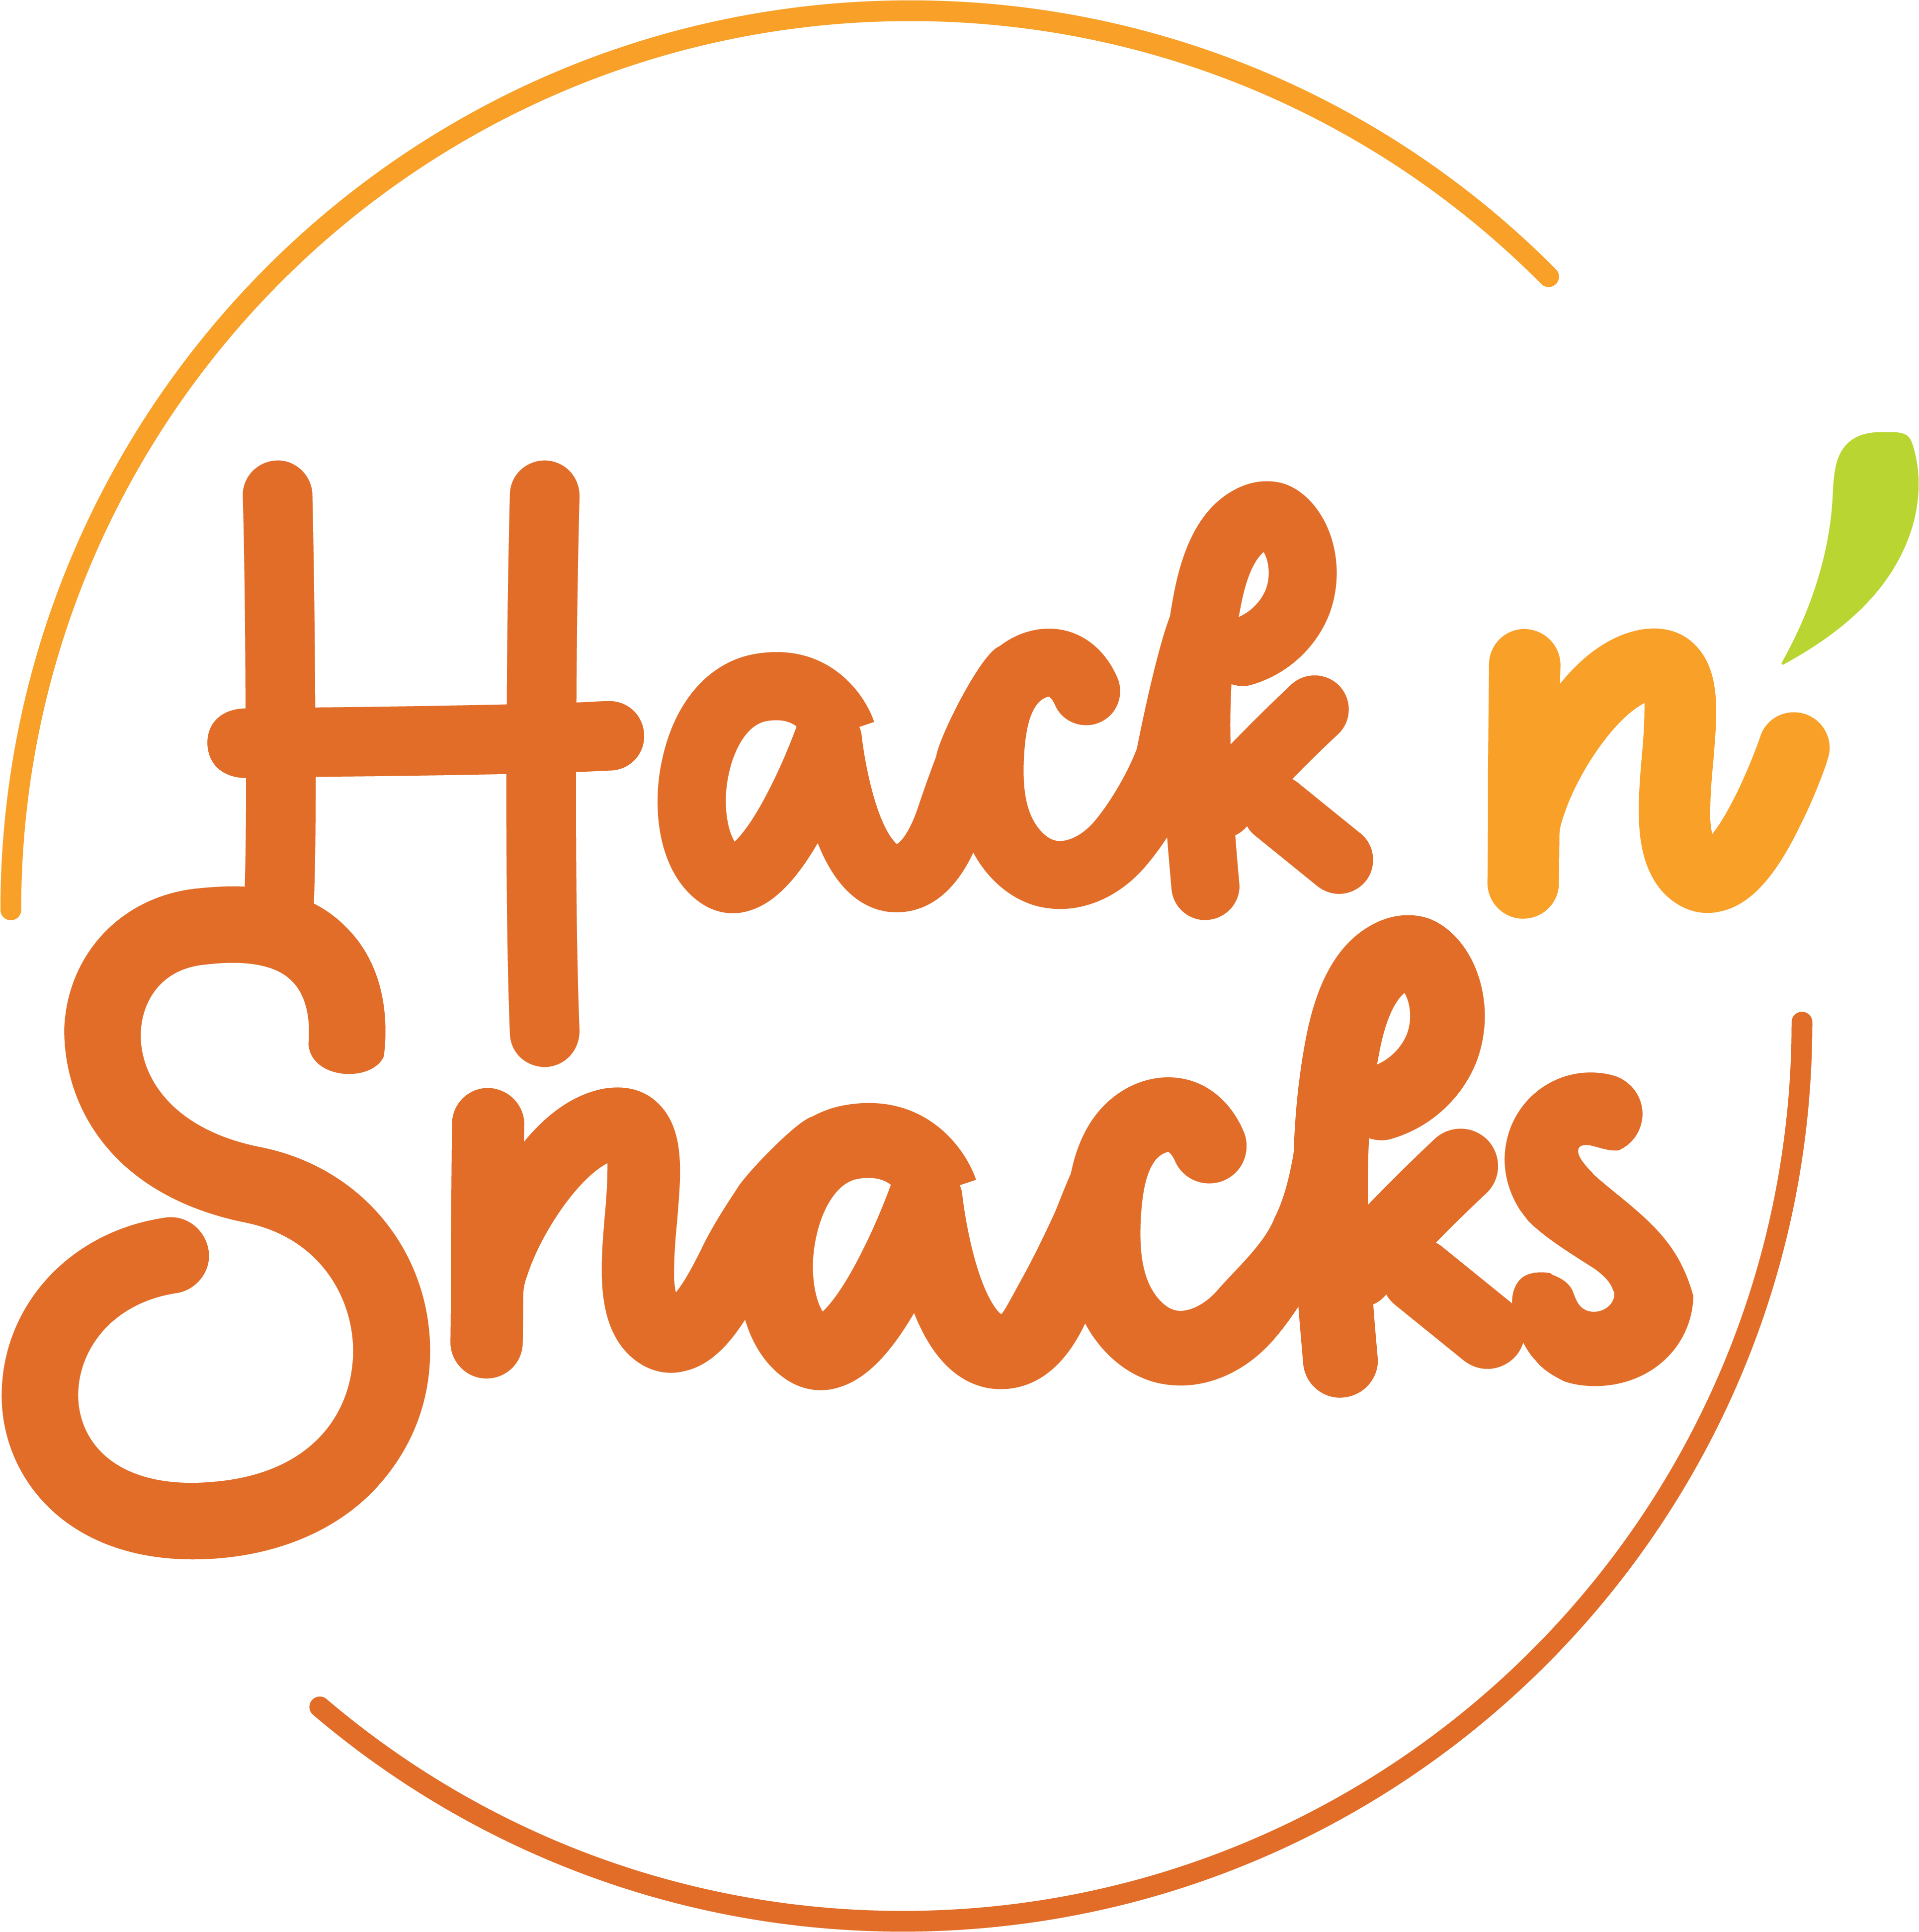 Hack_n_snacks logo 2 (original).png